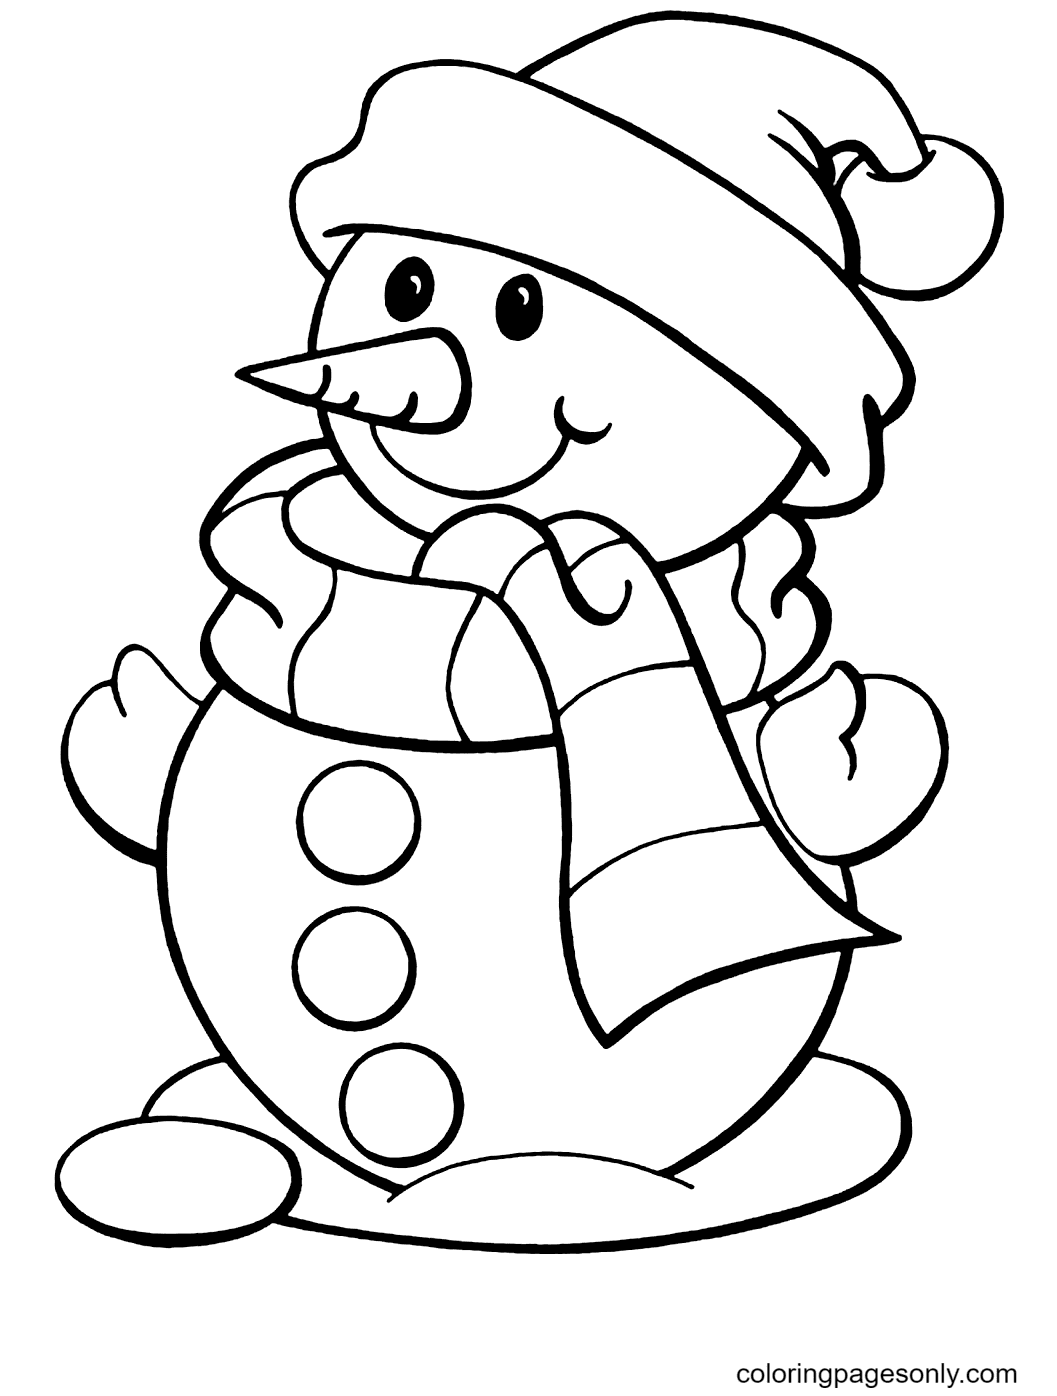 Dibujo de Mr. Snowman para colorear